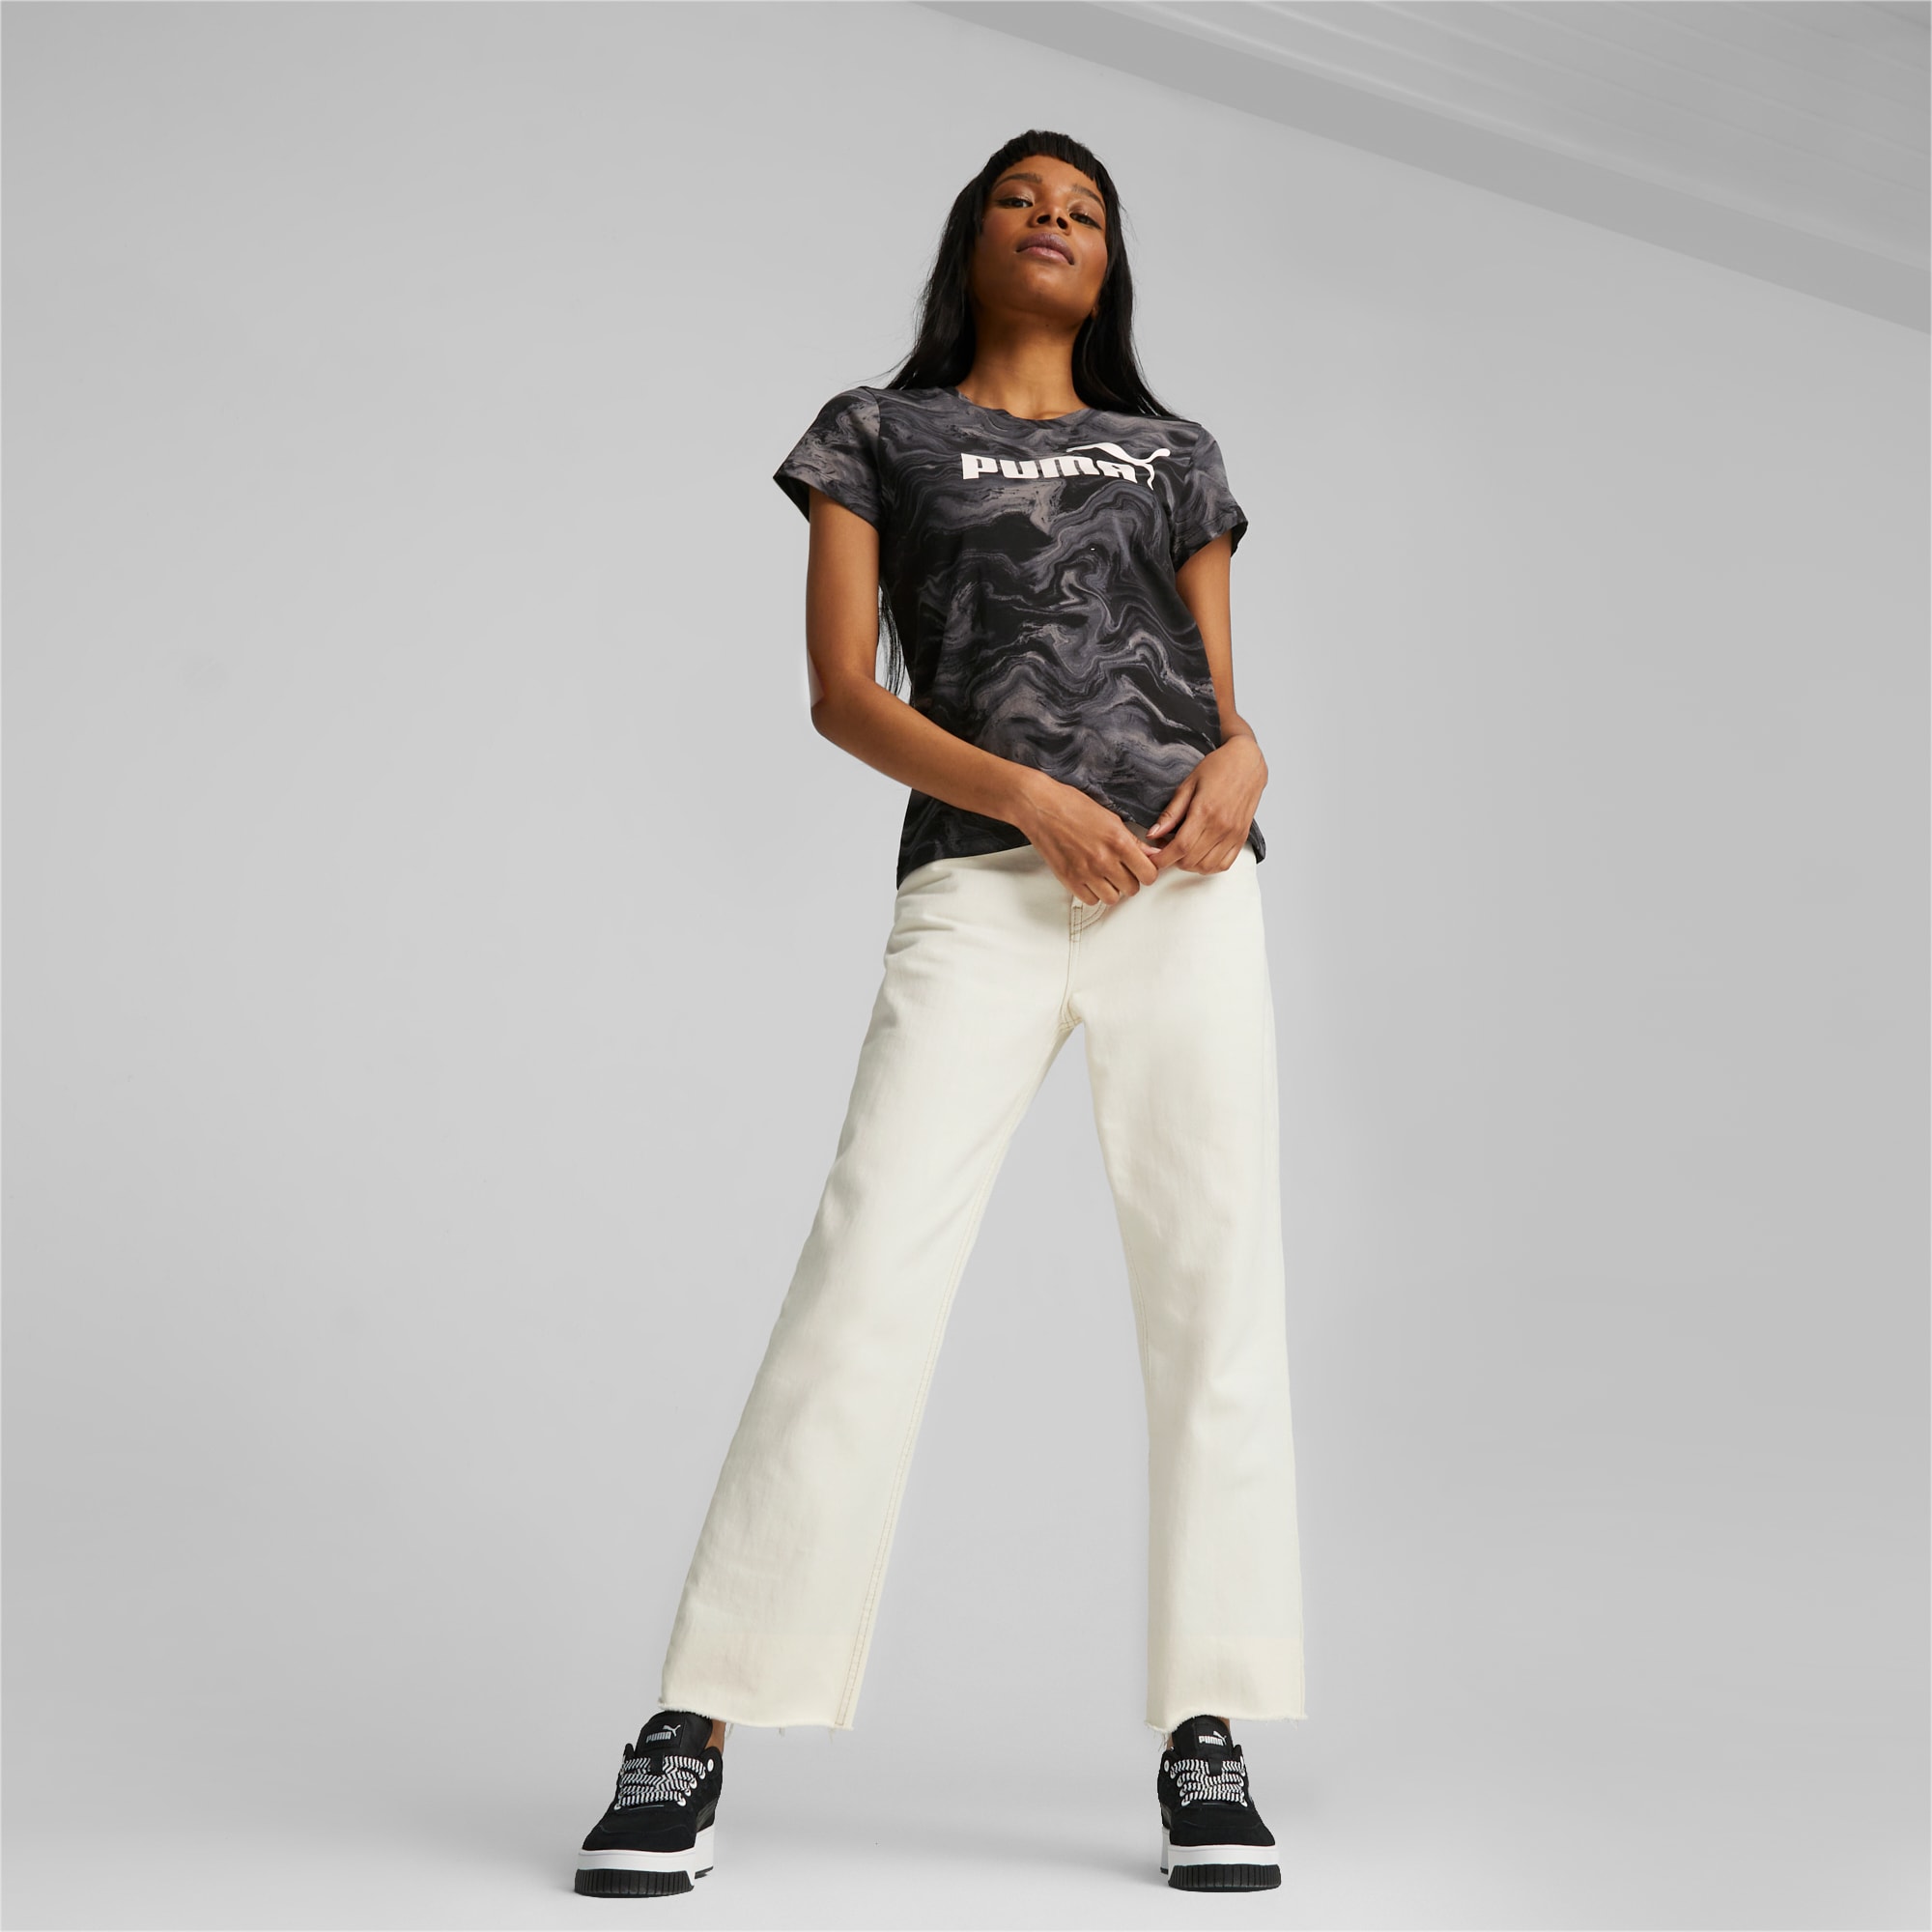 PUMA Ess+ Marbleized Women's T-Shirt, Black, Size XS, Clothing